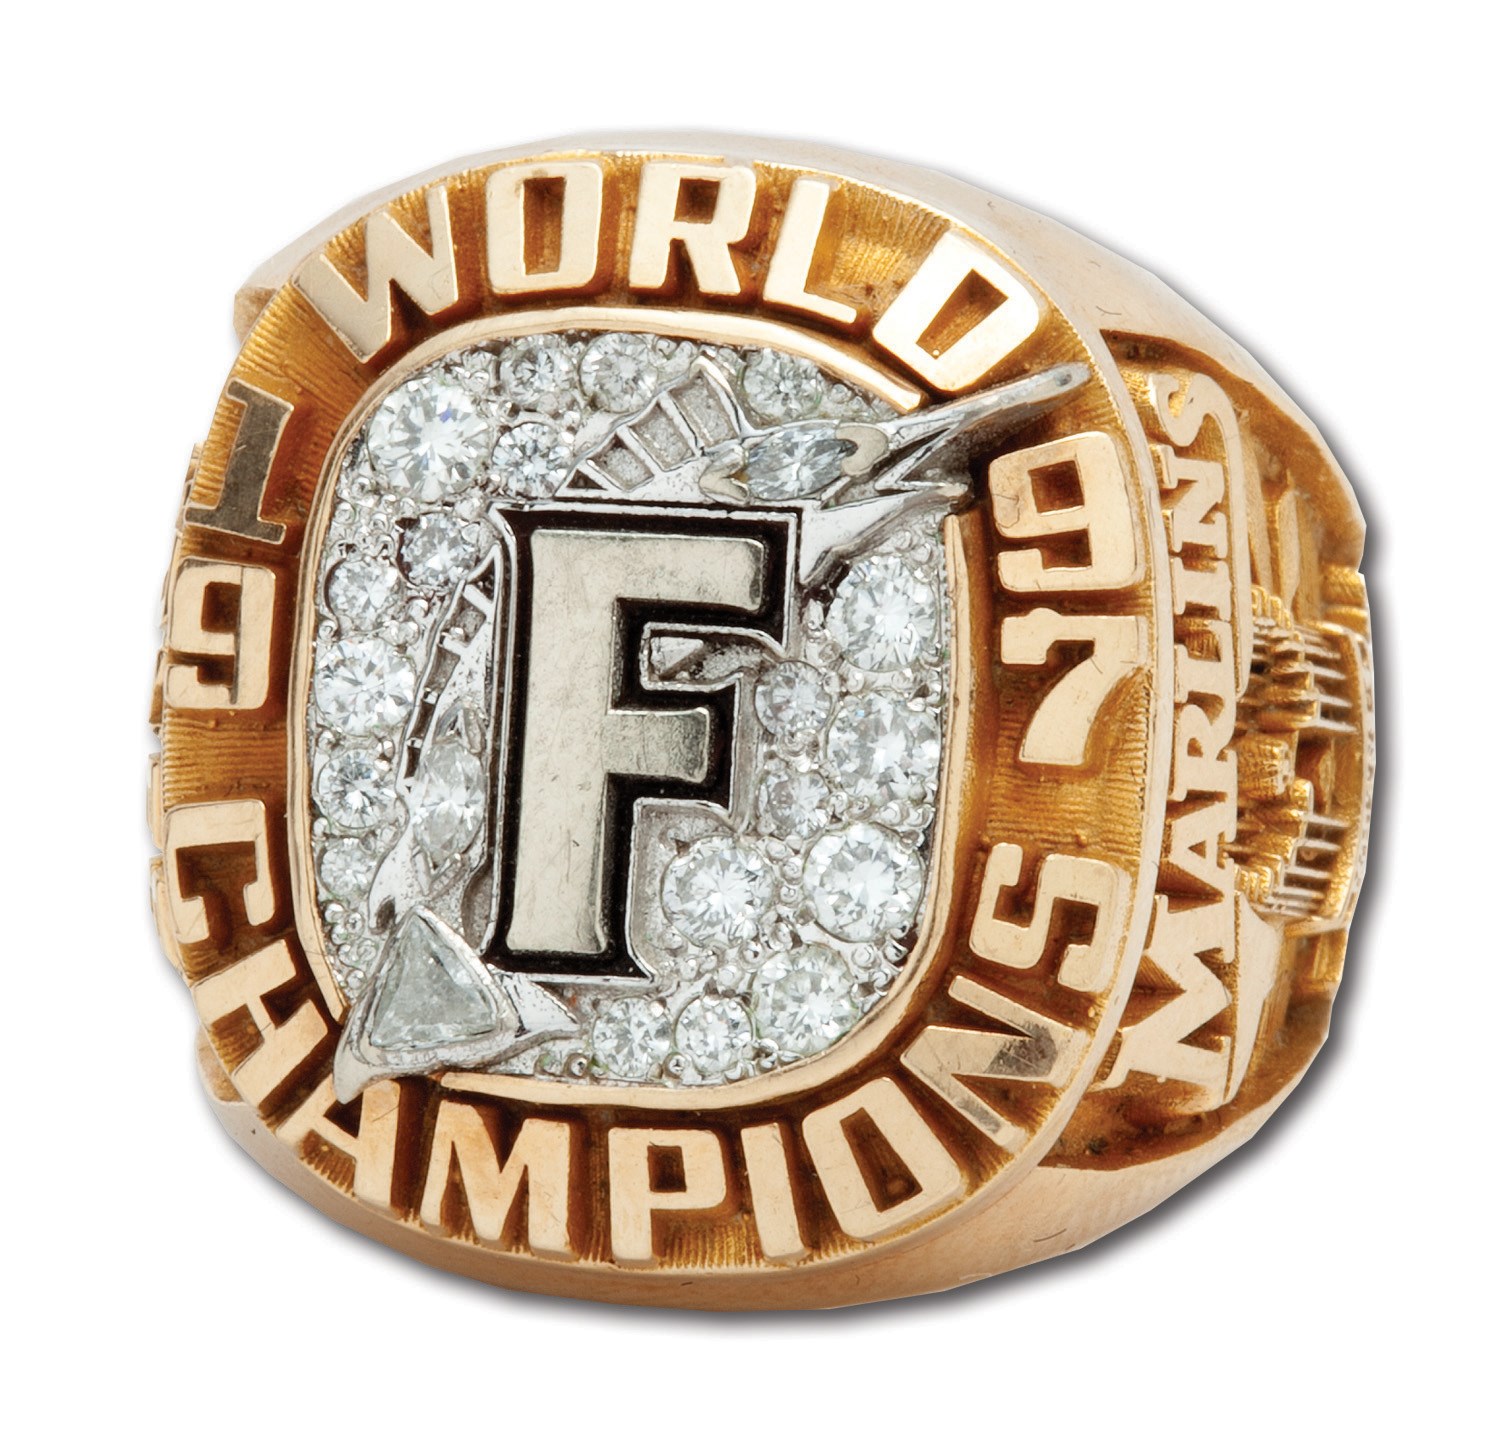 Florida Marlins World Series Champions